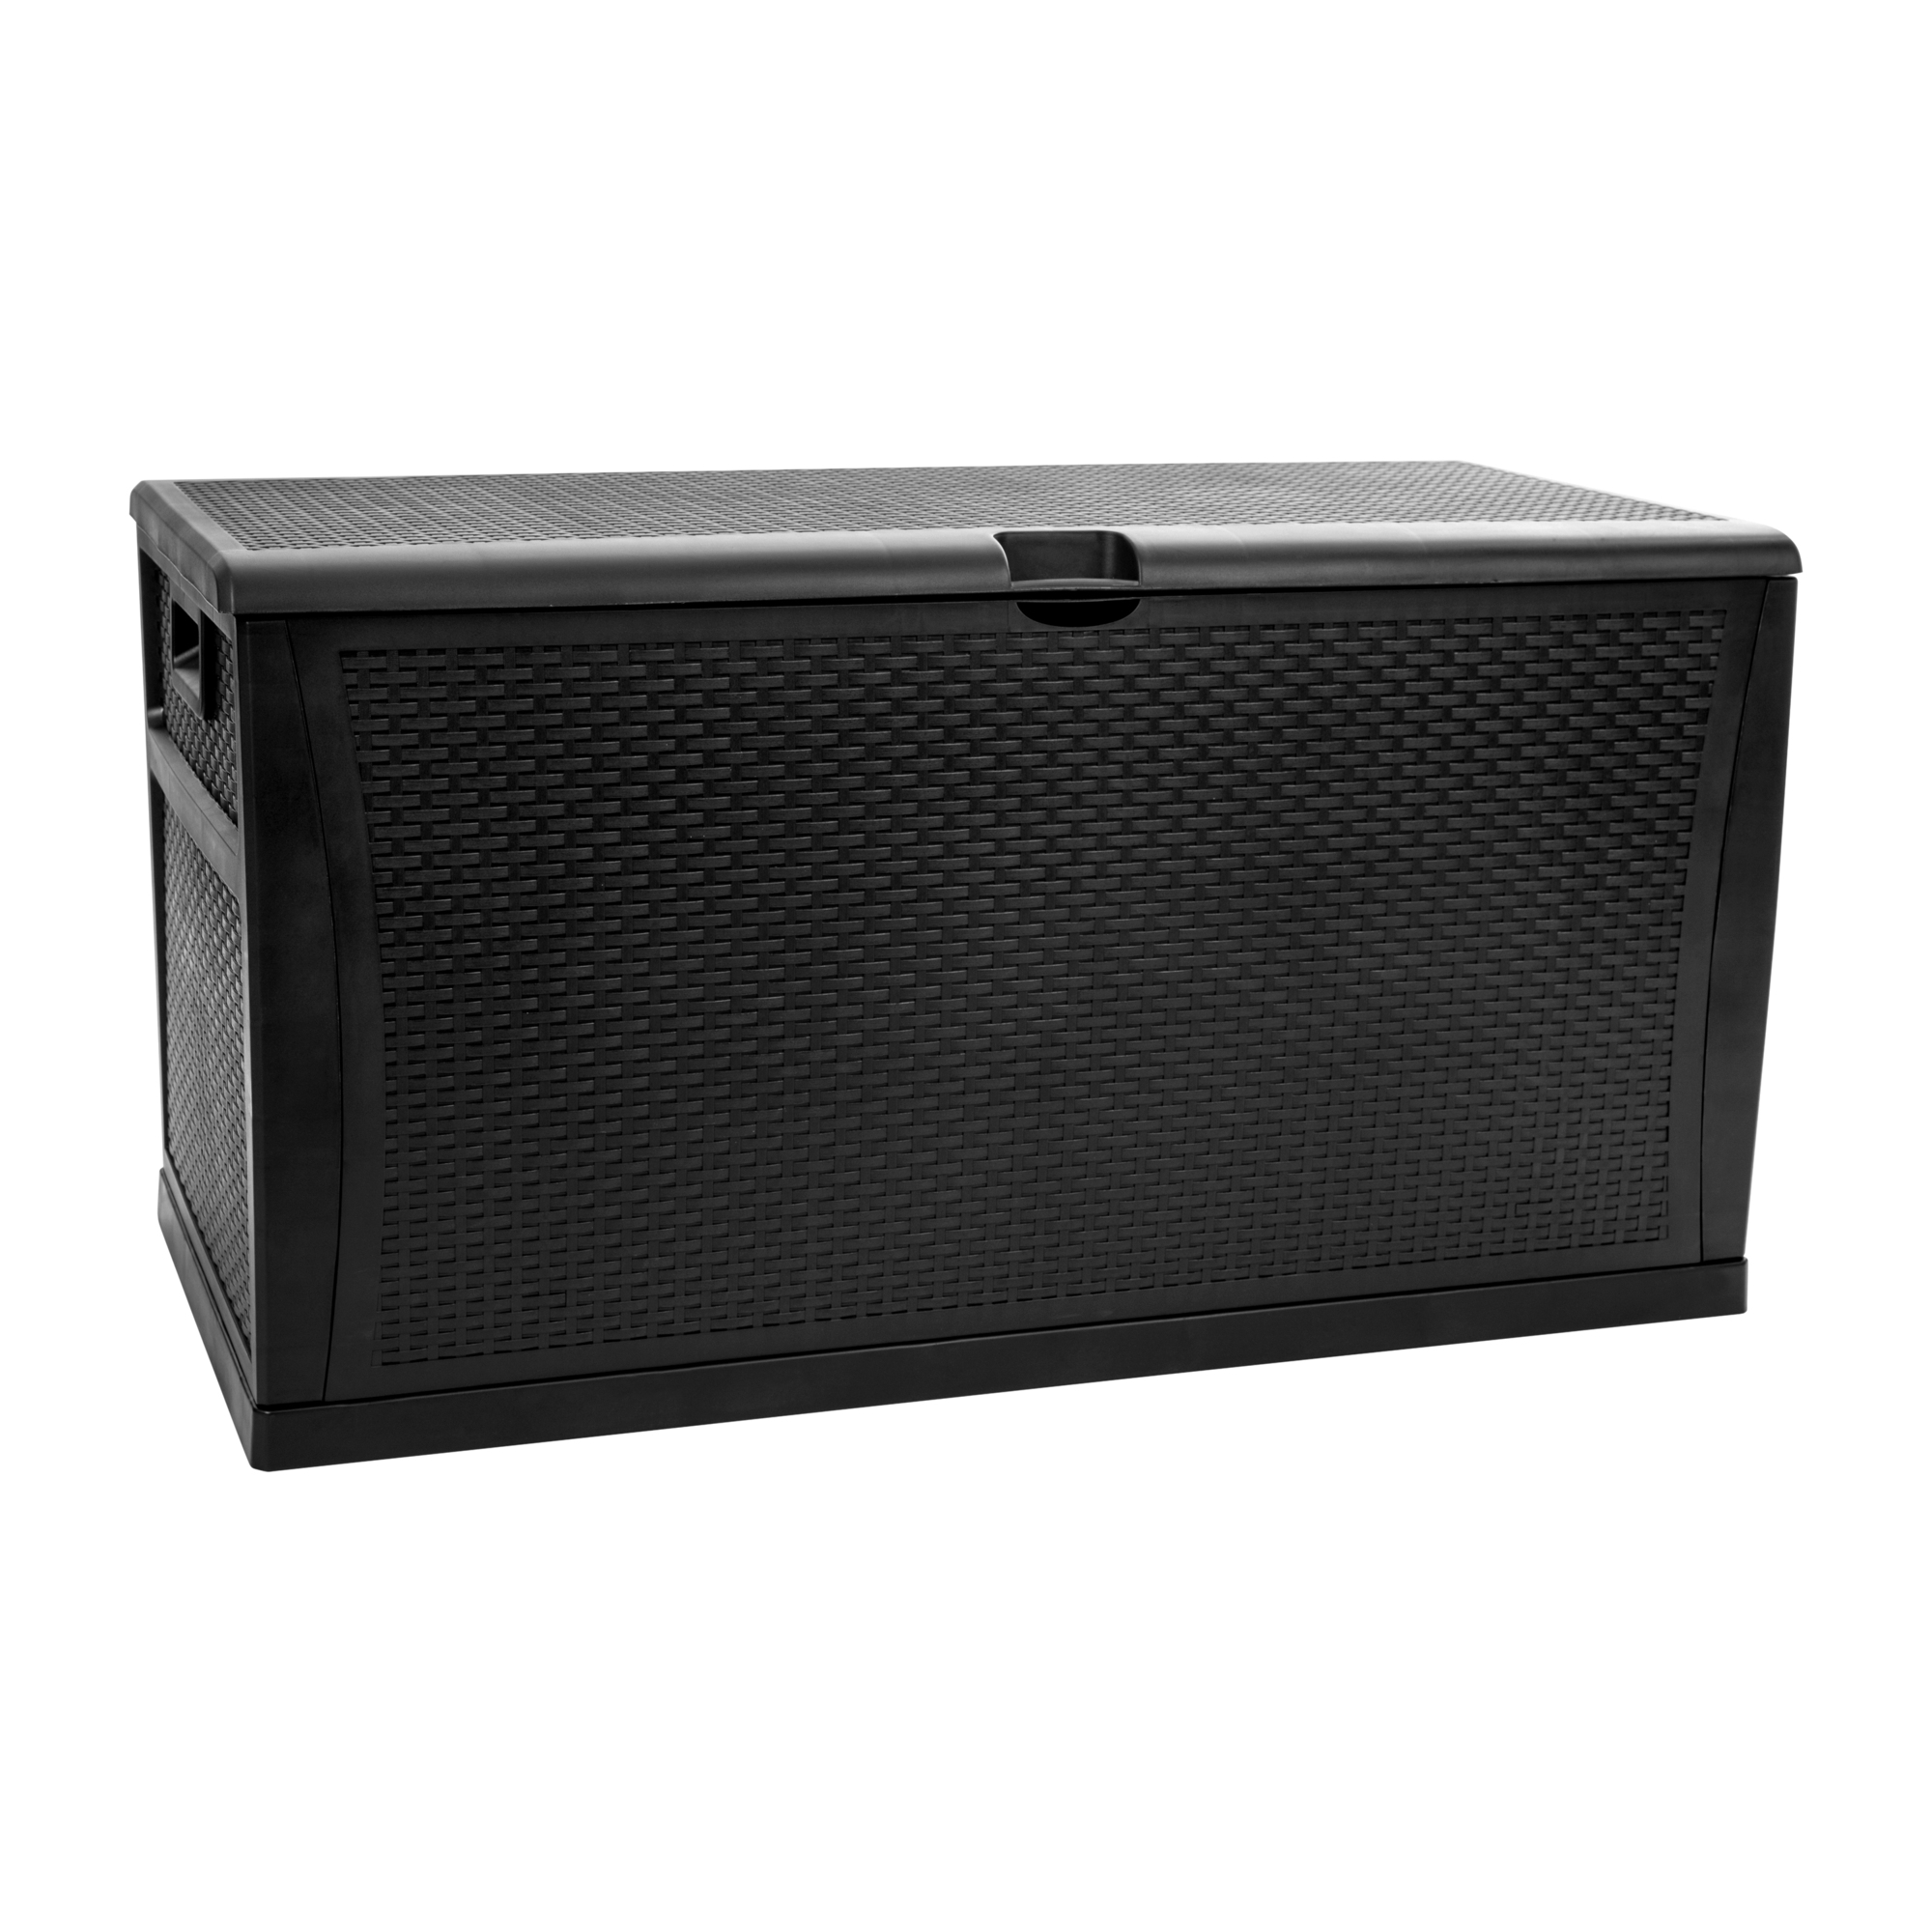 Flash Furniture, Black 120 Gallon Plastic Deck Box Outdoor Storage, Capacity 120 Gal, Model QTKTL4023BK